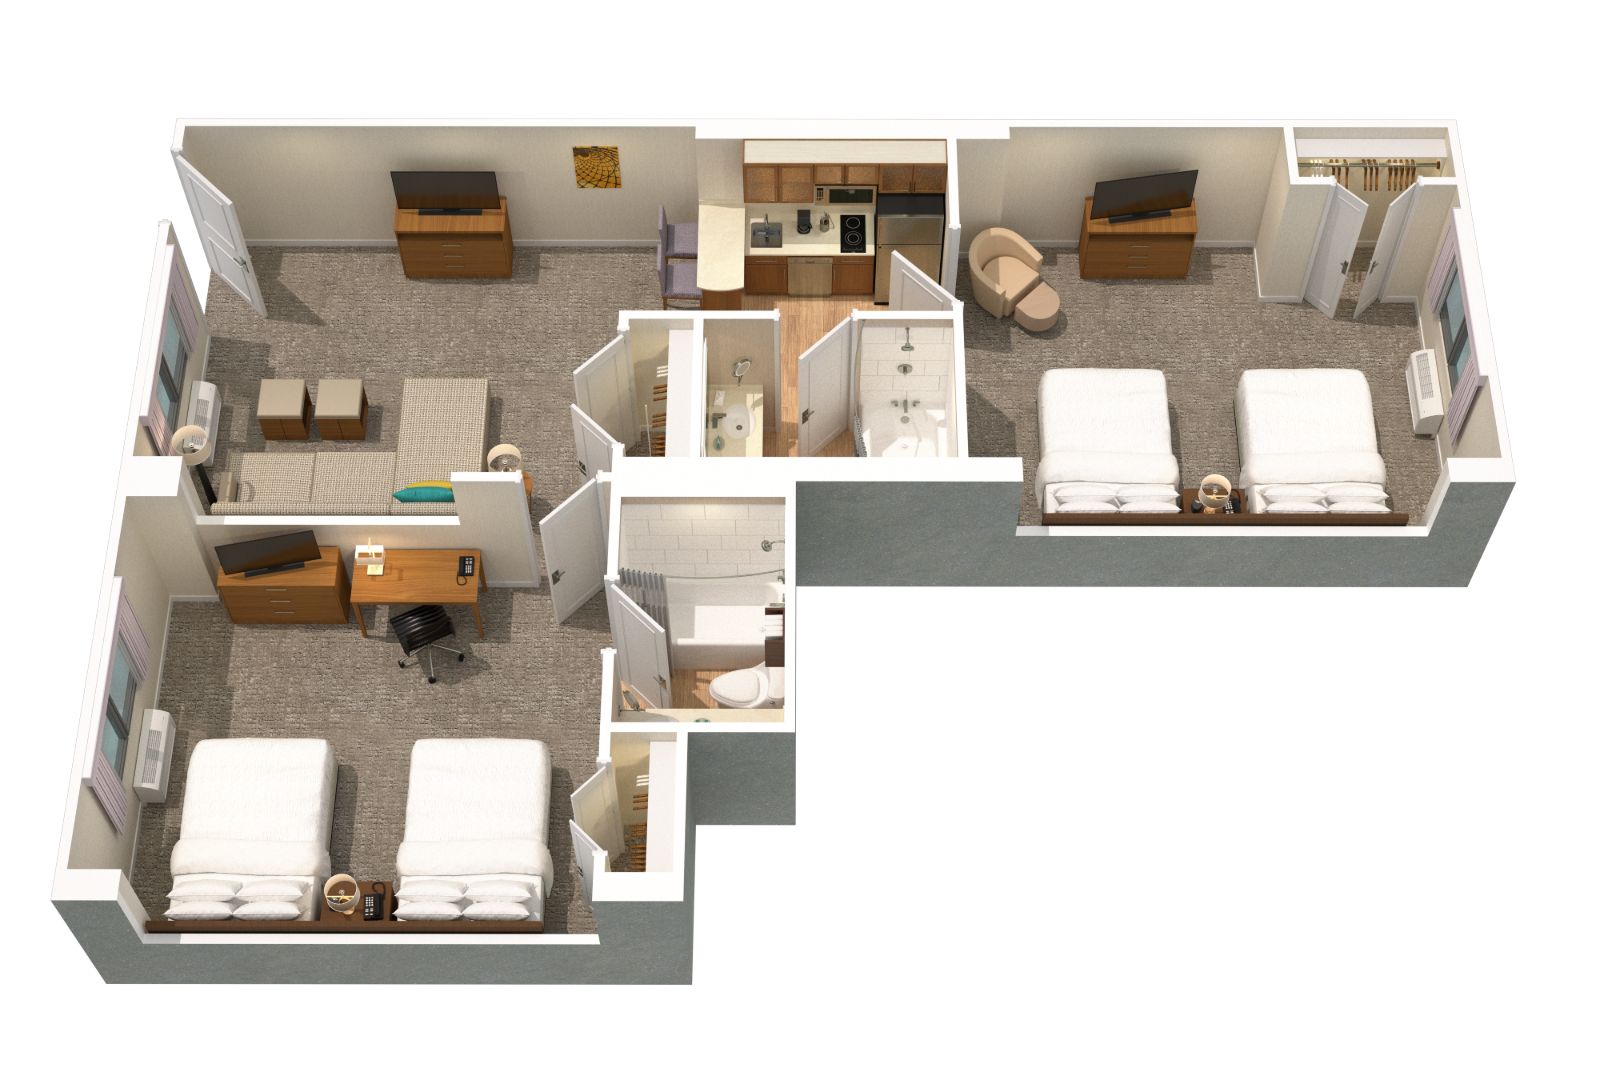 Staybridge Suites Floor Plan Carpet Vidalondon